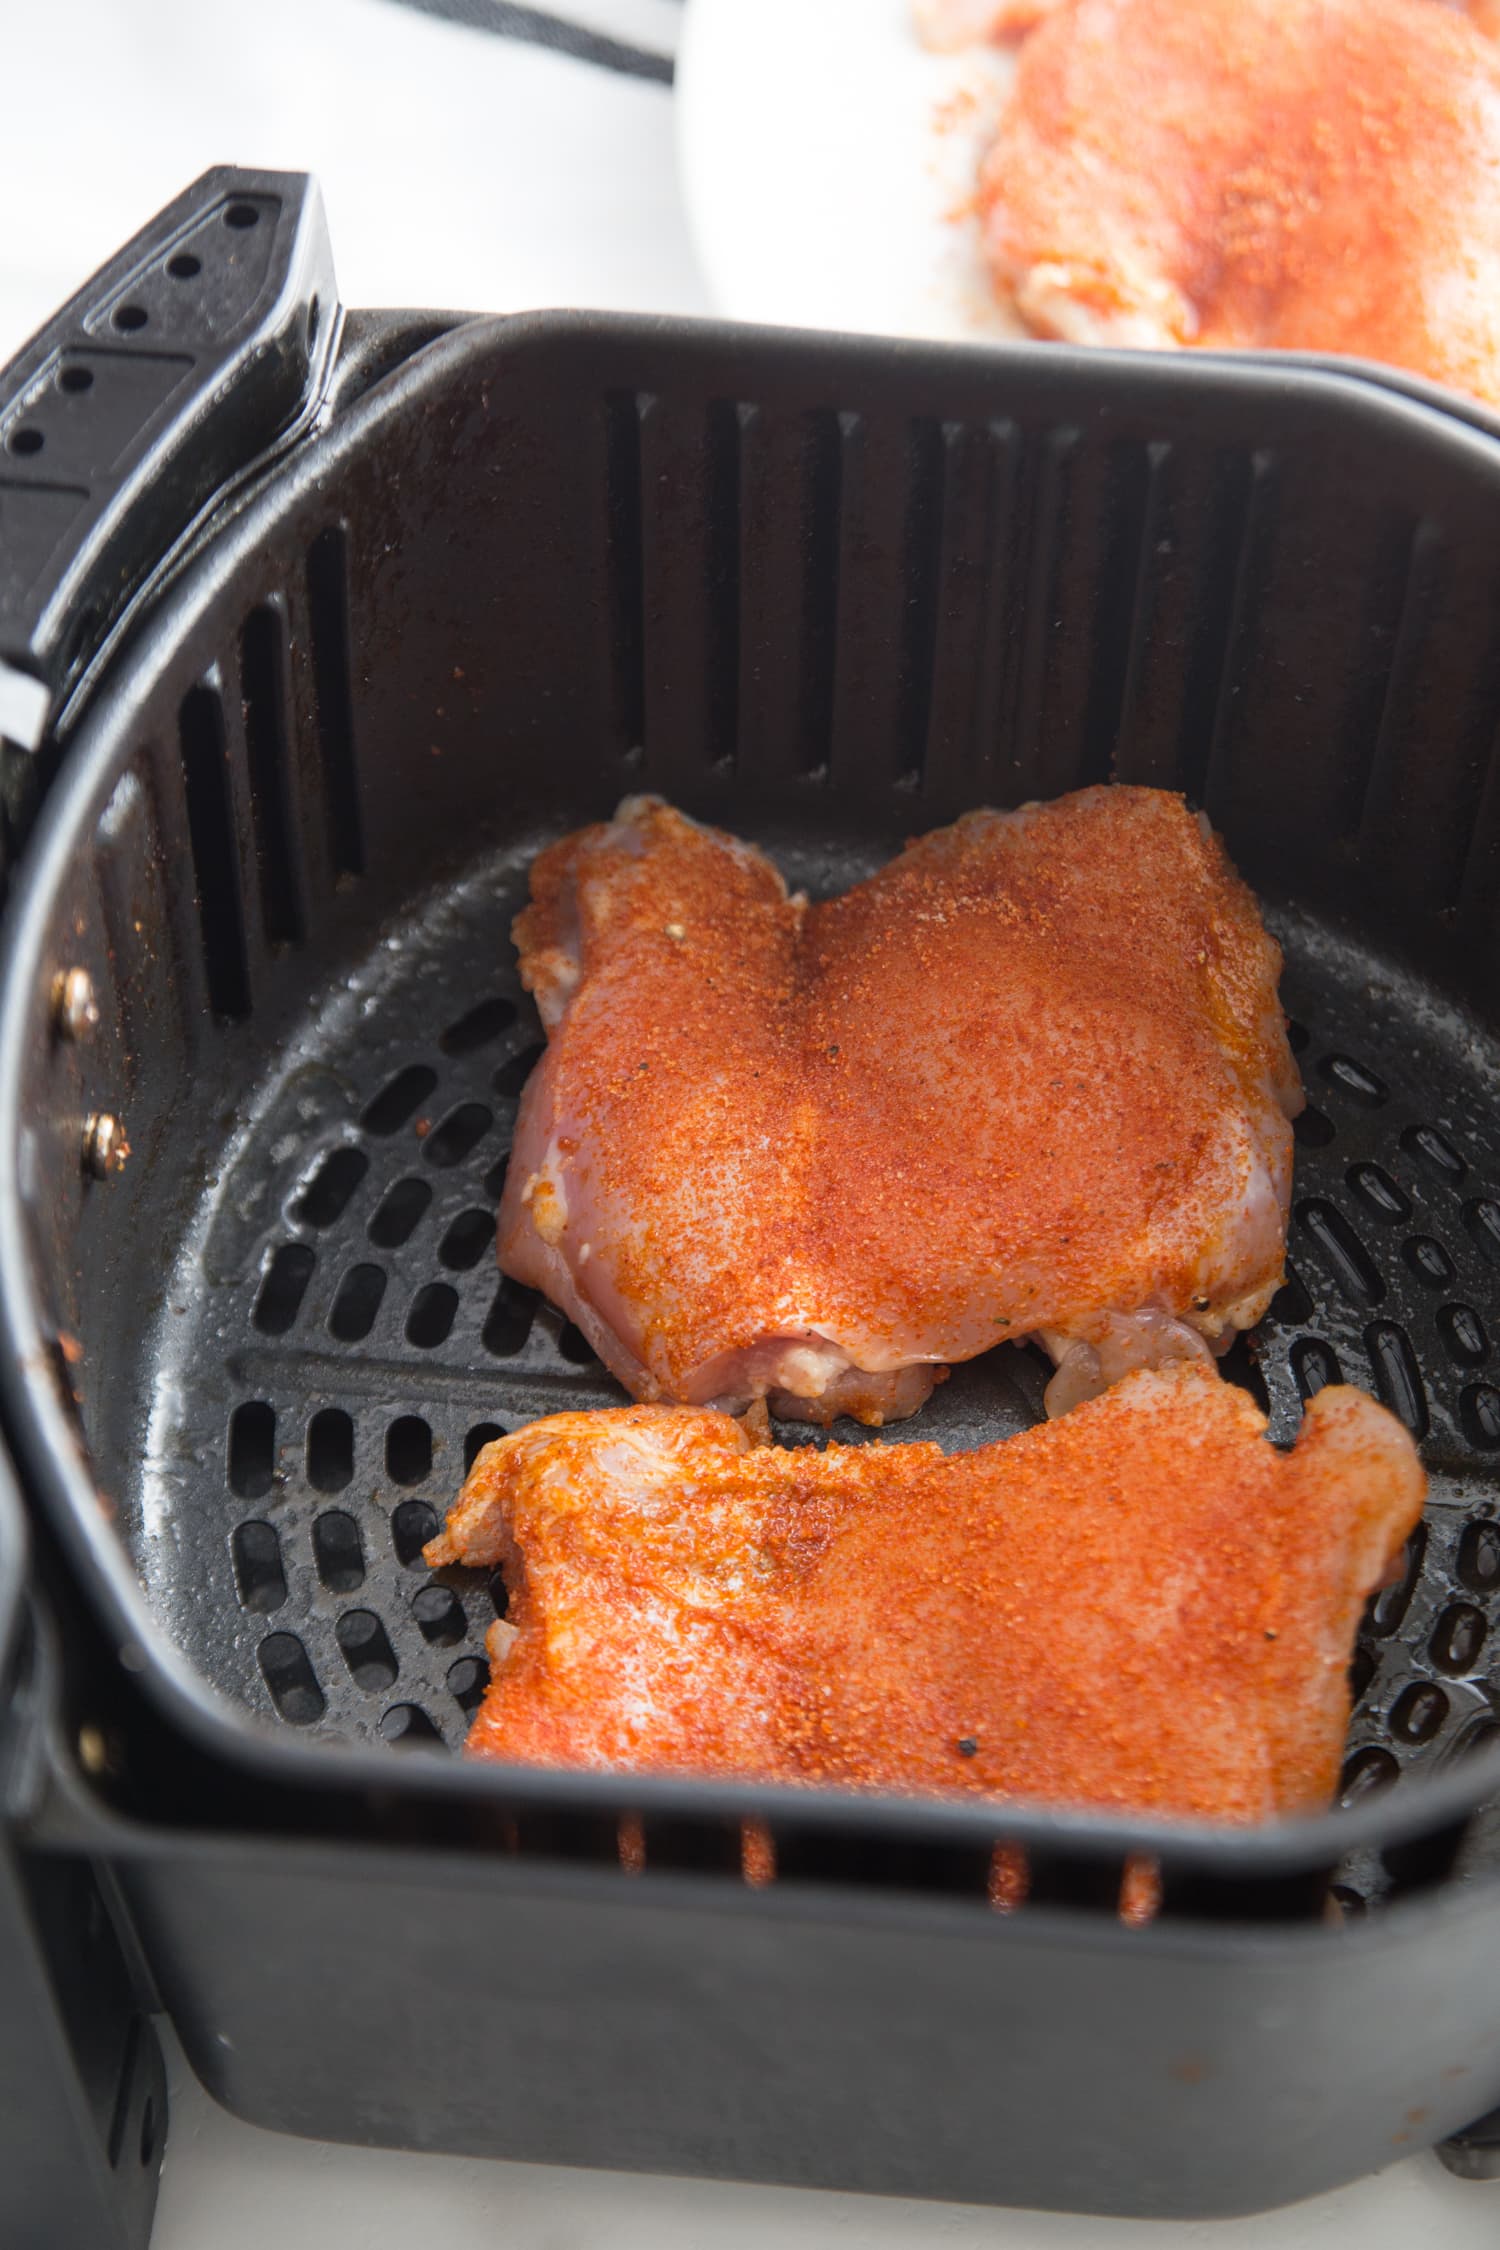 Seasoned chicken thighs in an air fryer basket.